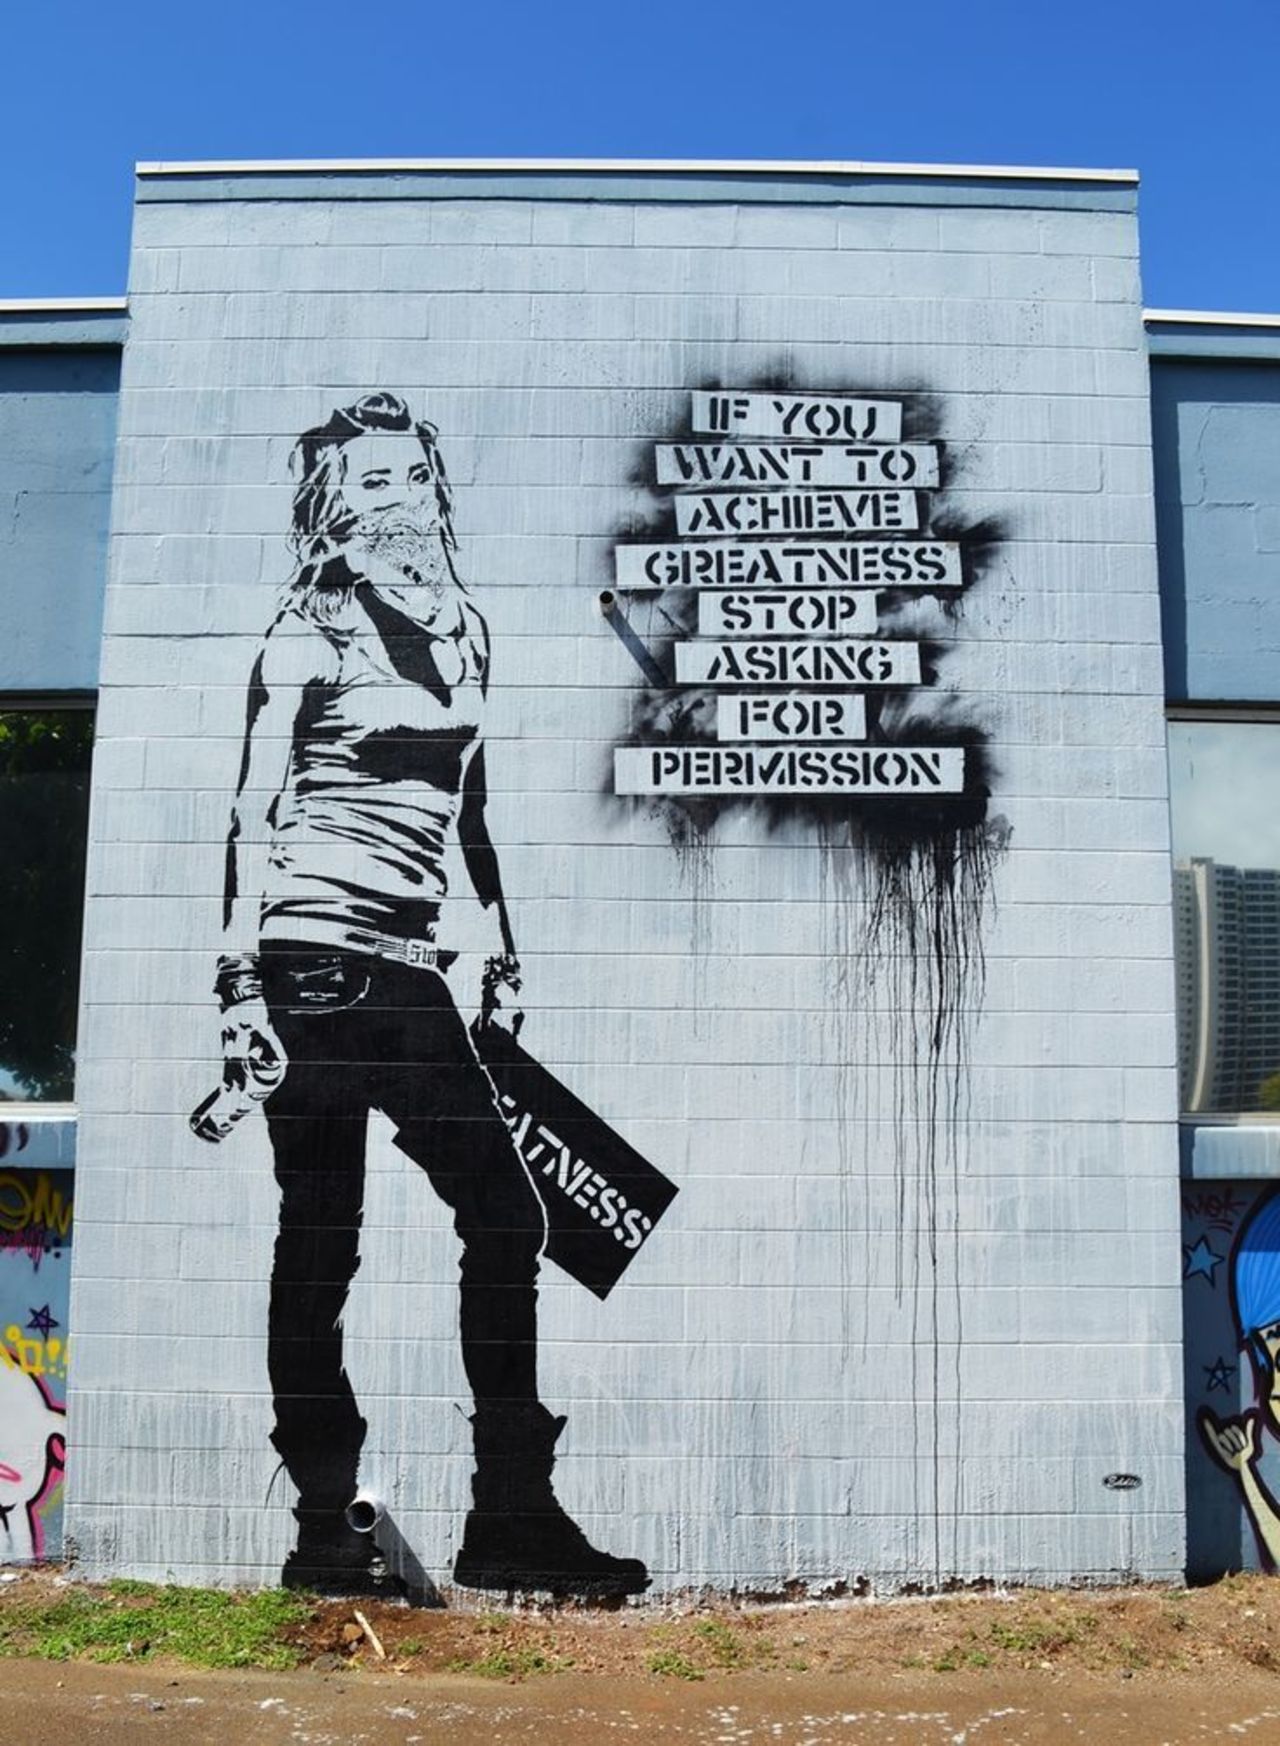 Ambition by Eddie Colla#streetart #mural #graffiti #art https://t.co/Z2M6xeBVrG